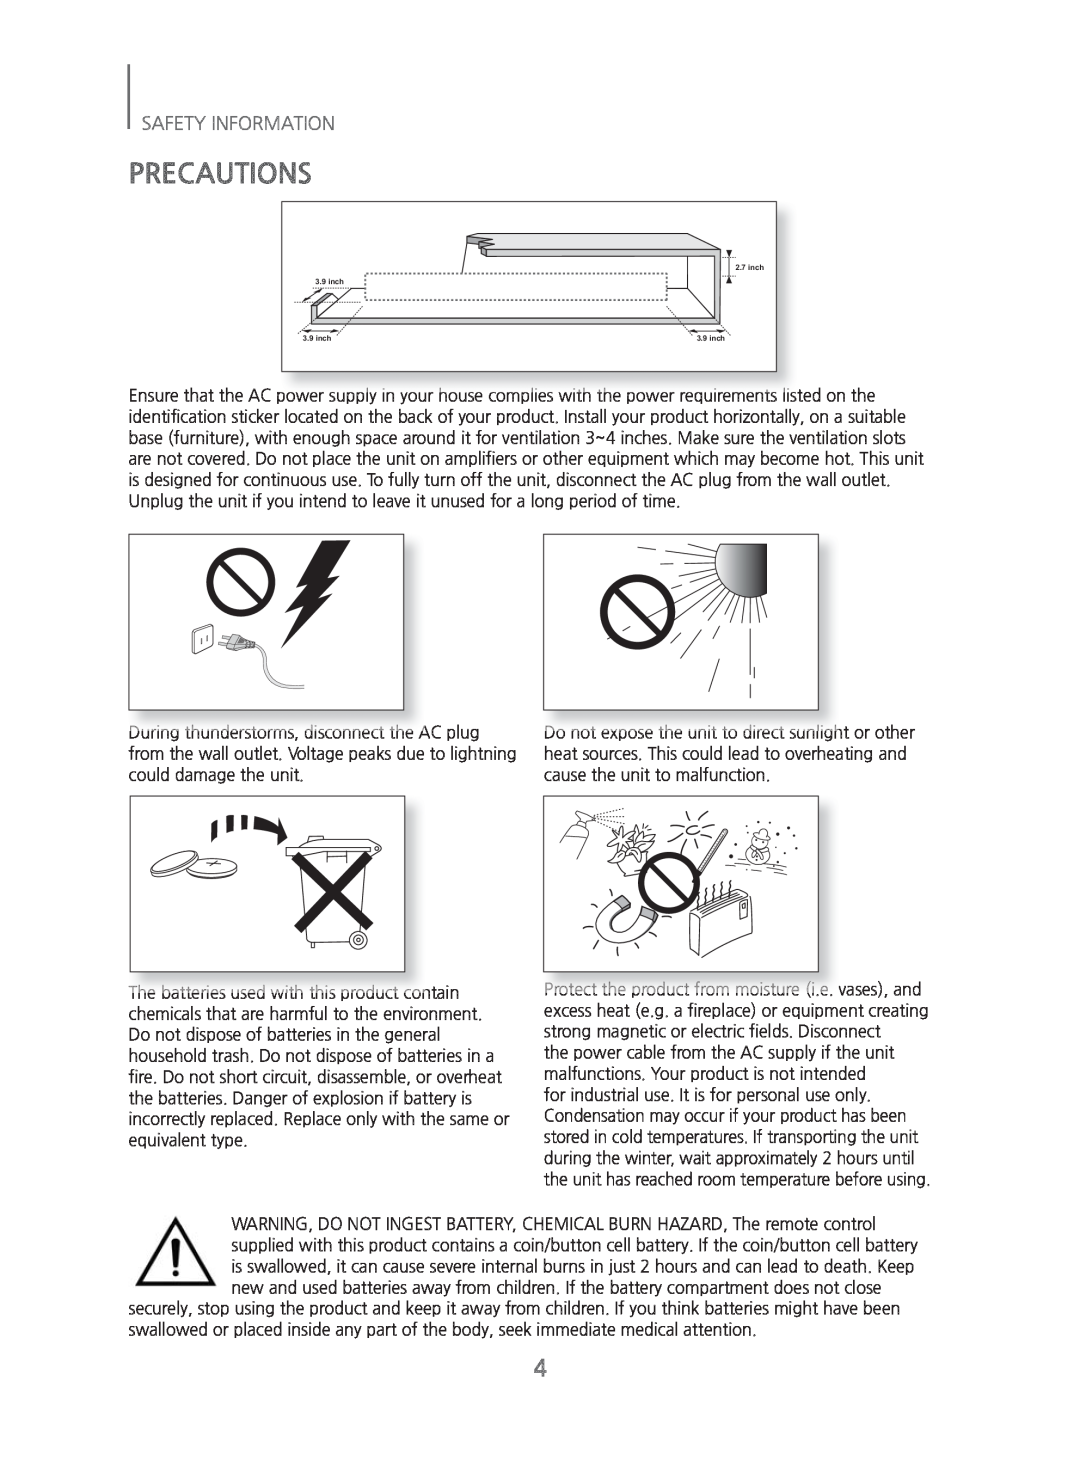 Samsung HW-H750/ZA manual Precautions, Safety Information, inch 